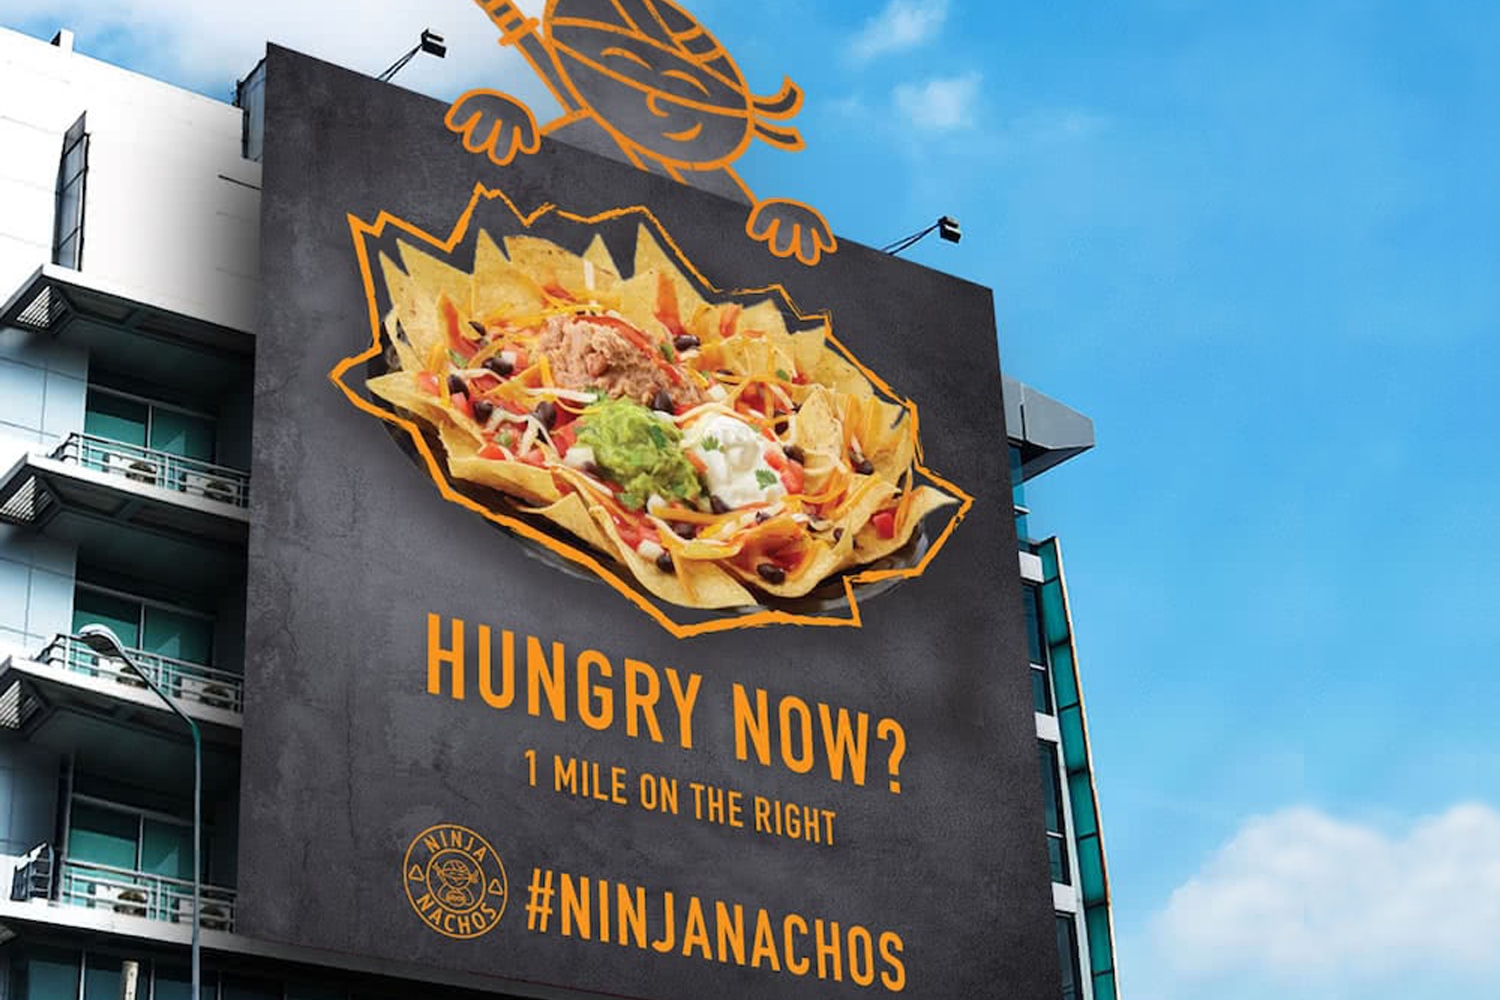 Ninha Nachos advertising campaign.